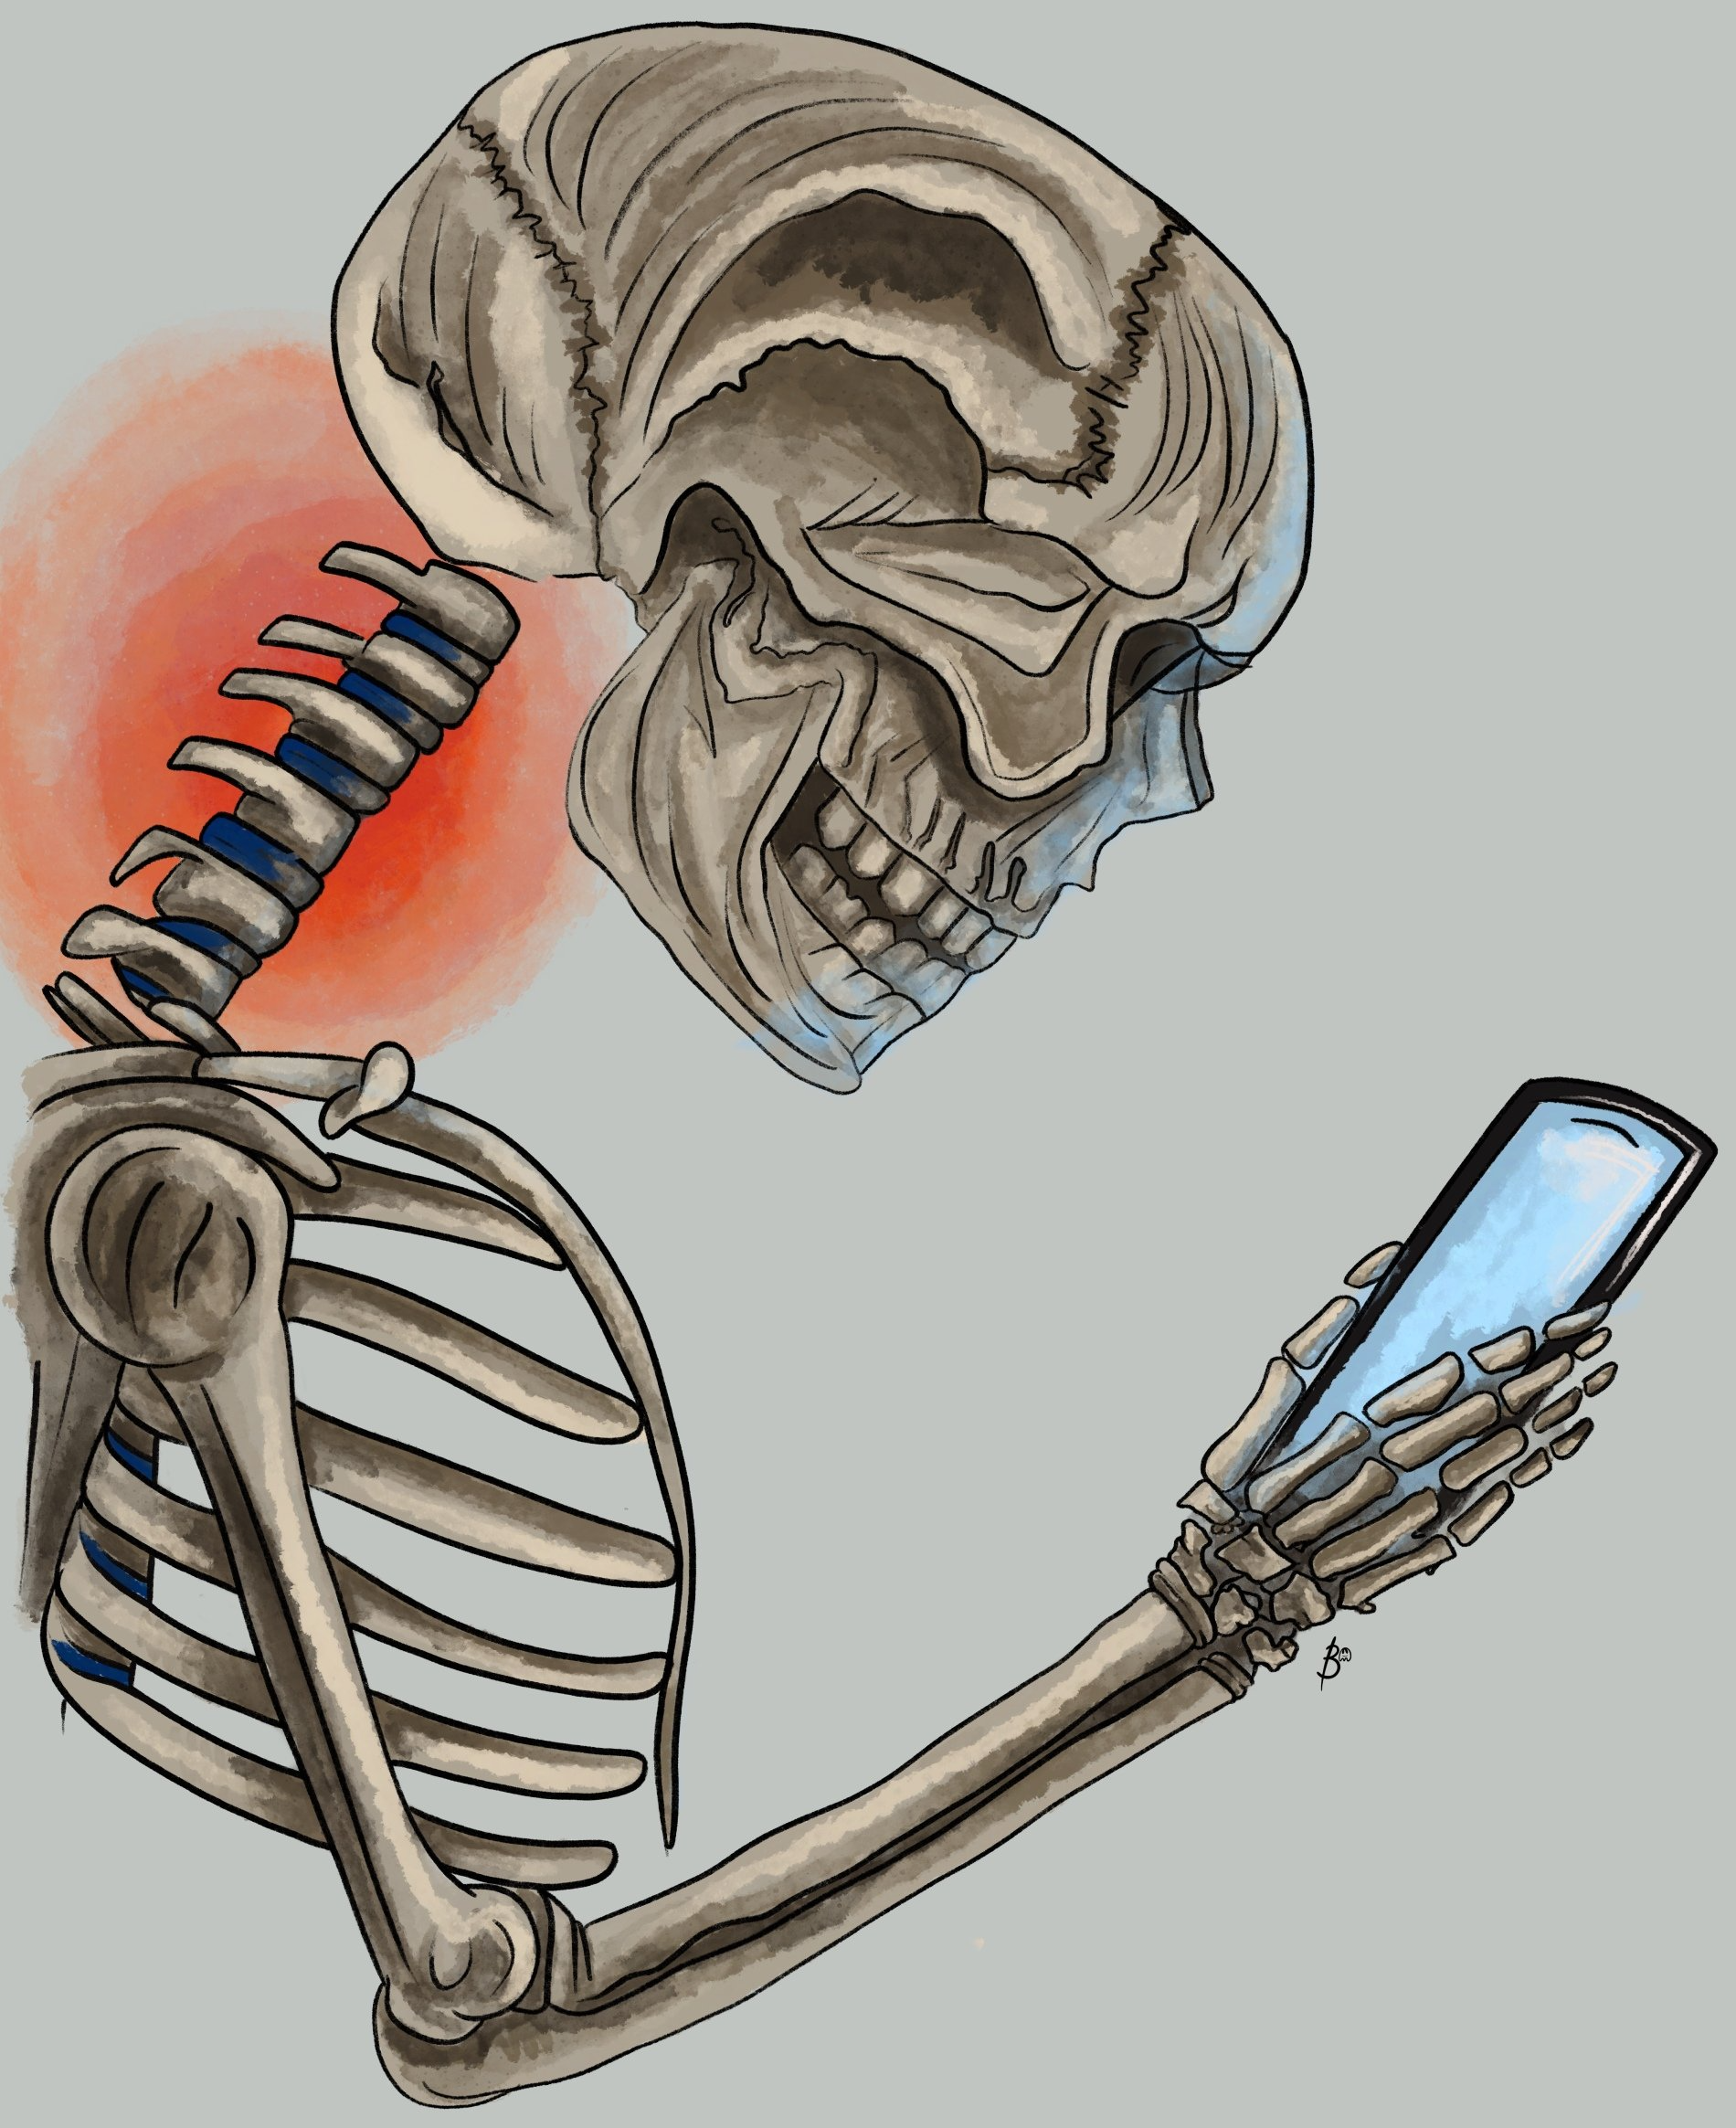 Skeleton with neck pain